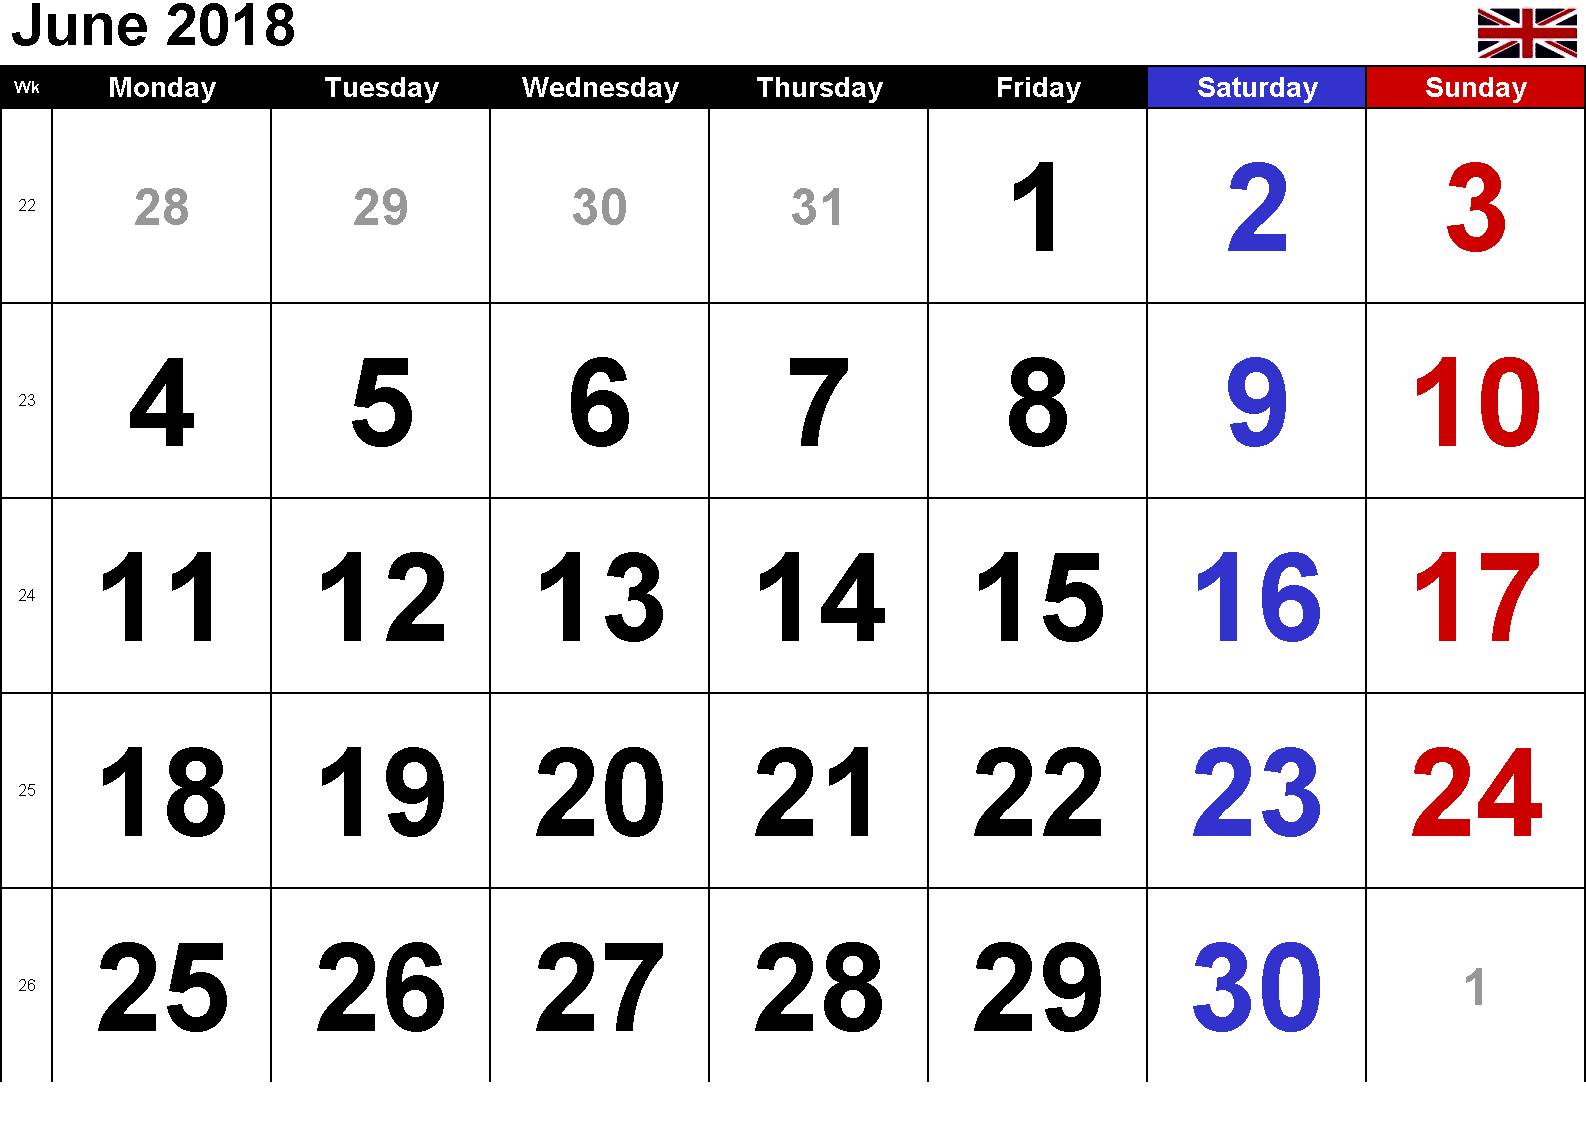 june-2018-calendar-uk-public-and-national-holidays-oppidan-library